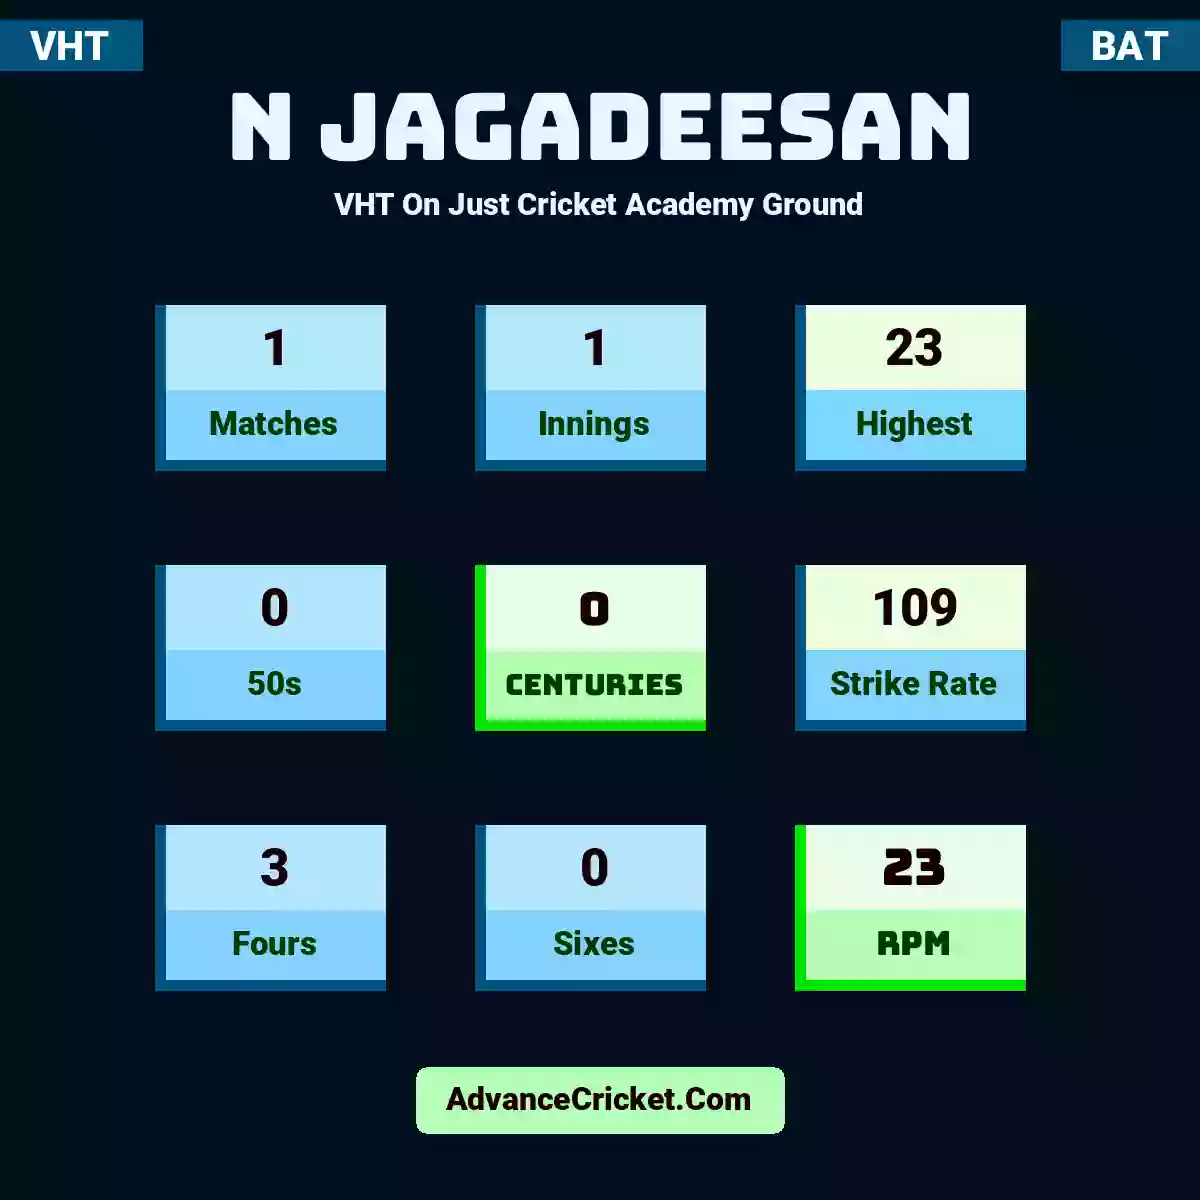 N Jagadeesan VHT  On Just Cricket Academy Ground, N Jagadeesan played 1 matches, scored 23 runs as highest, 0 half-centuries, and 0 centuries, with a strike rate of 109. N.Jagadeesan hit 3 fours and 0 sixes, with an RPM of 23.